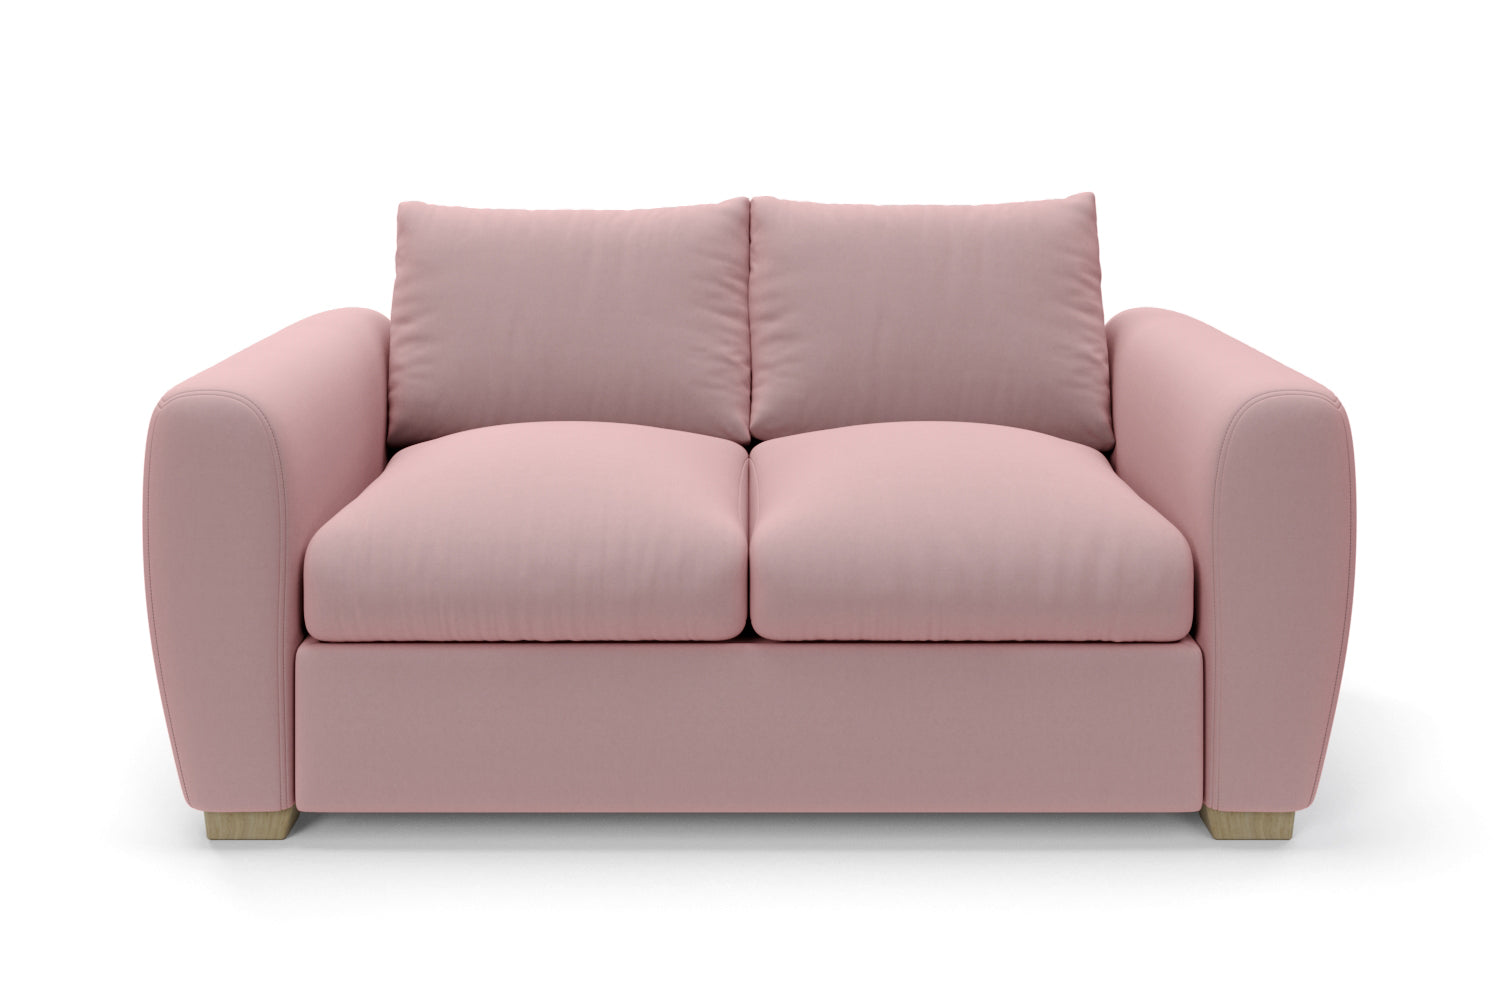 The Cloud Sundae - 2 Seater Sofa - Blush